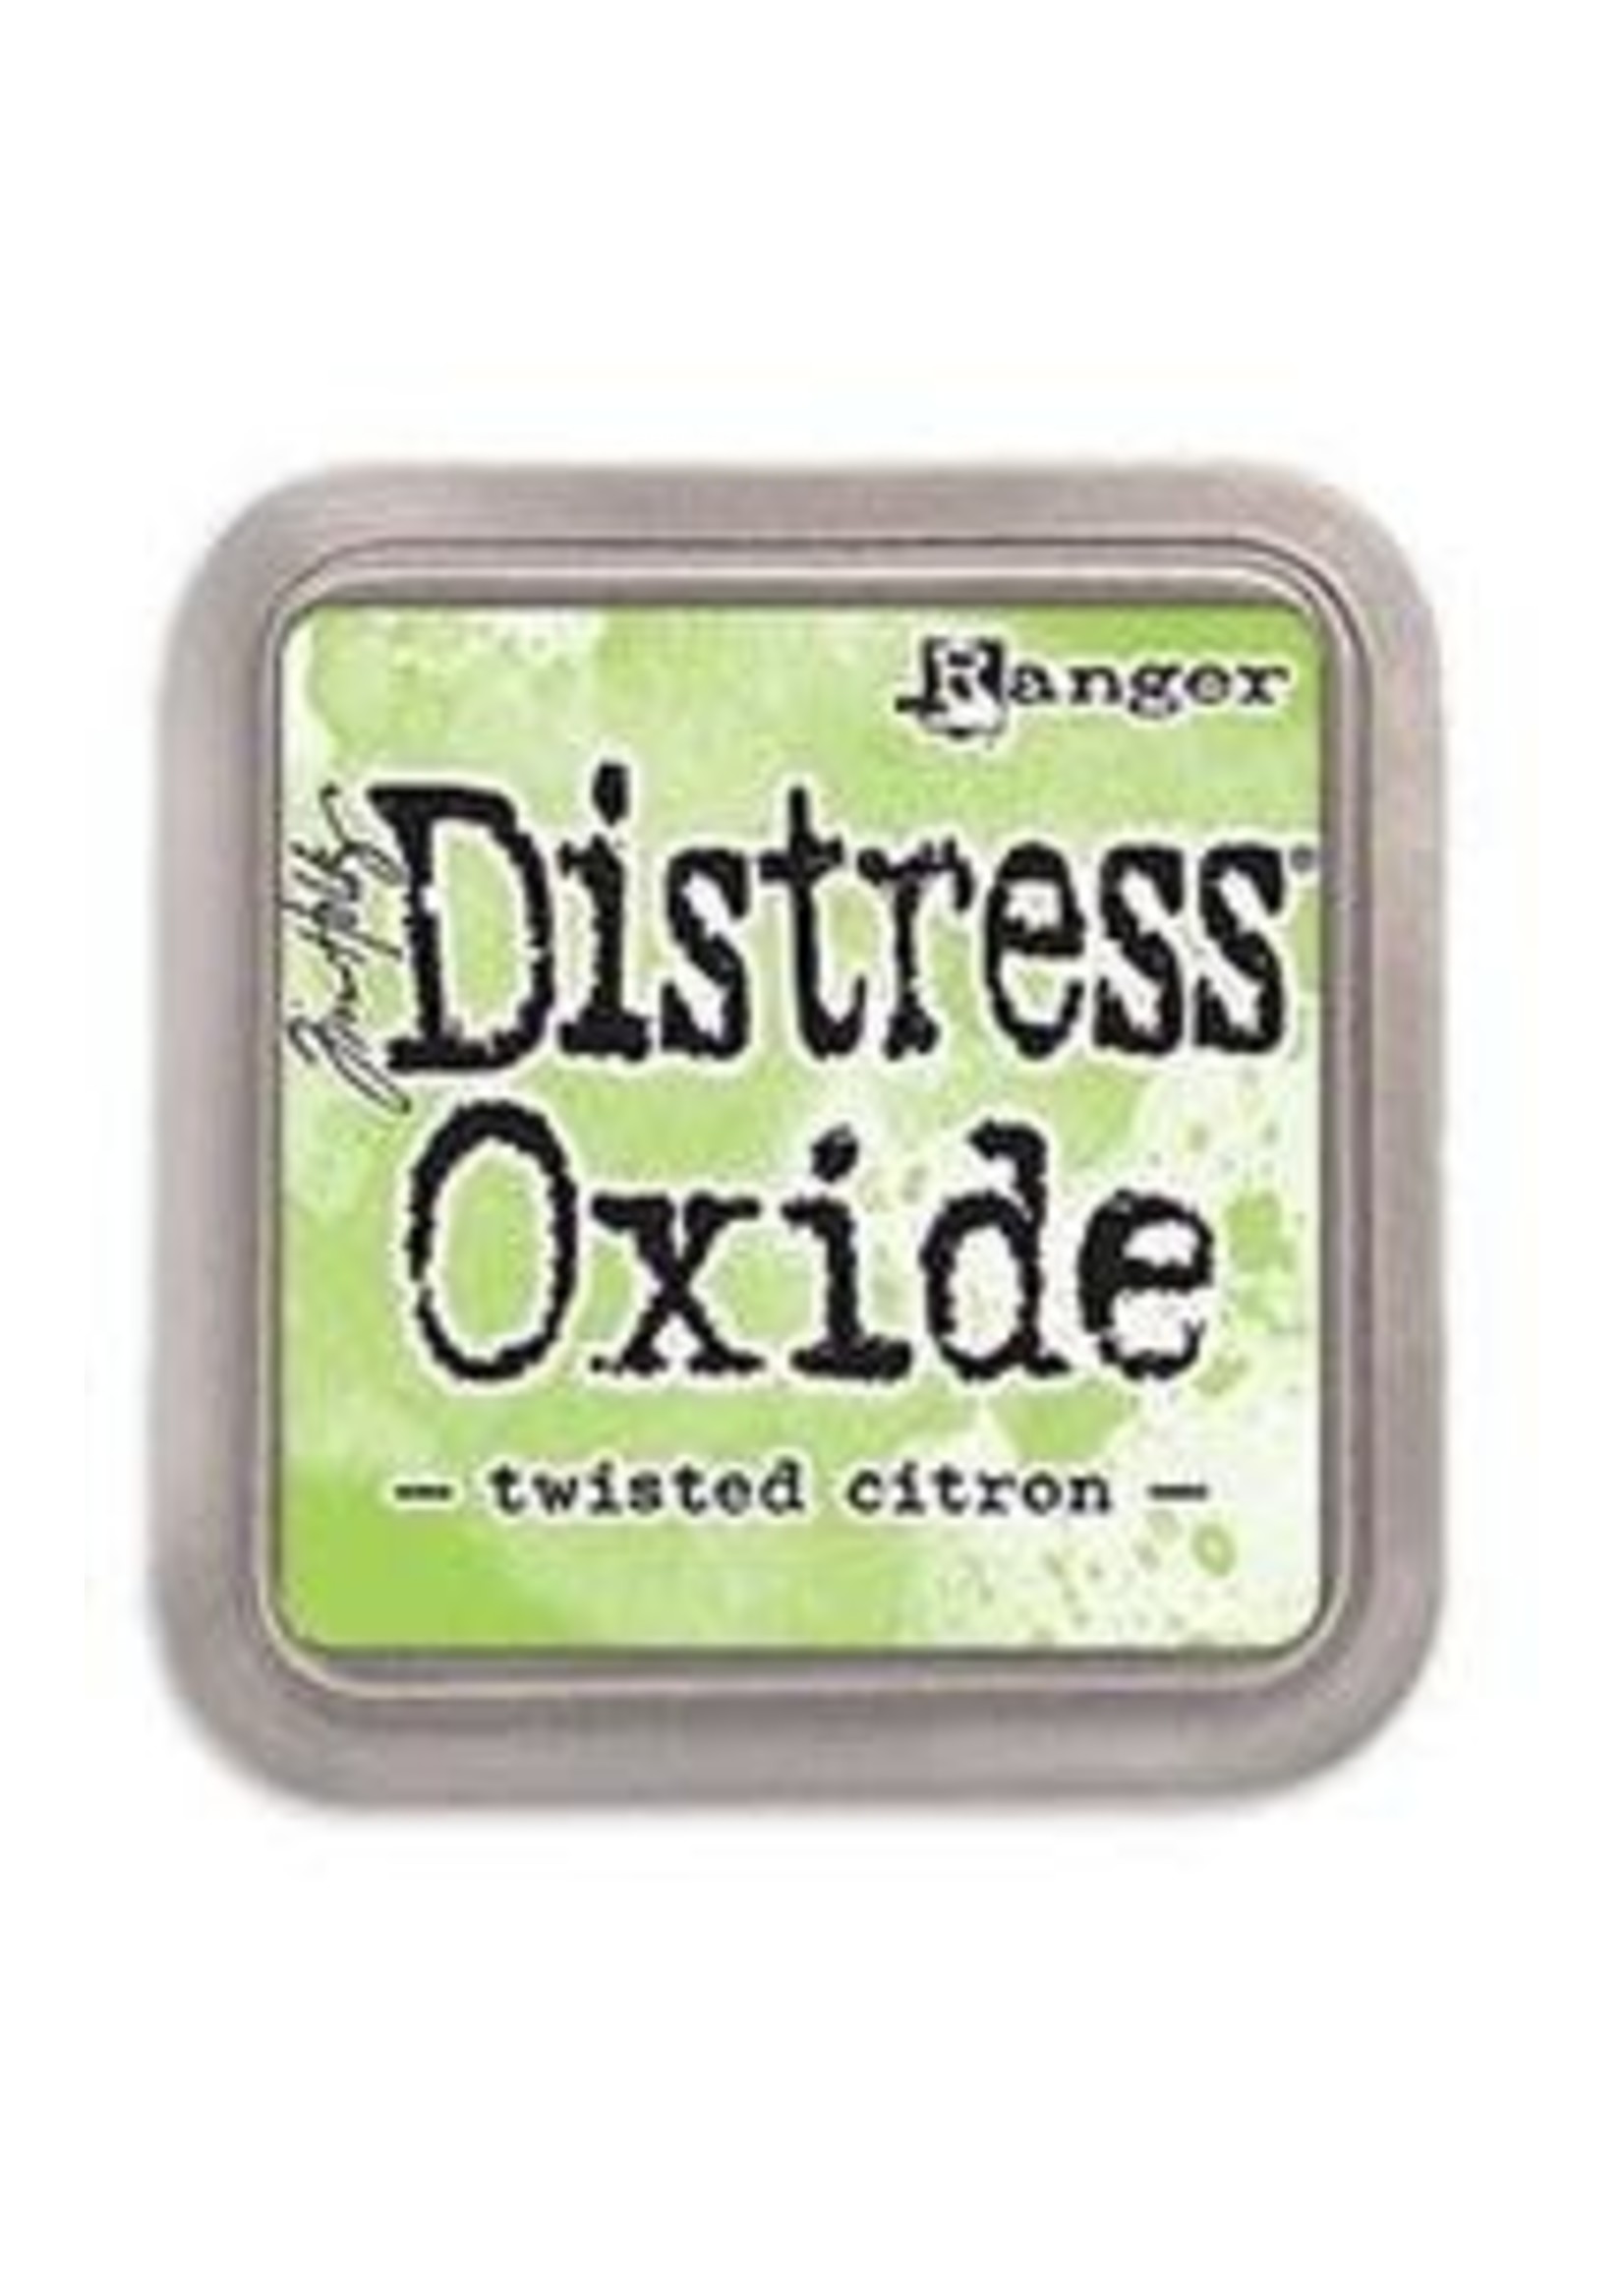 RANGER Distress Oxide Twisted Citron